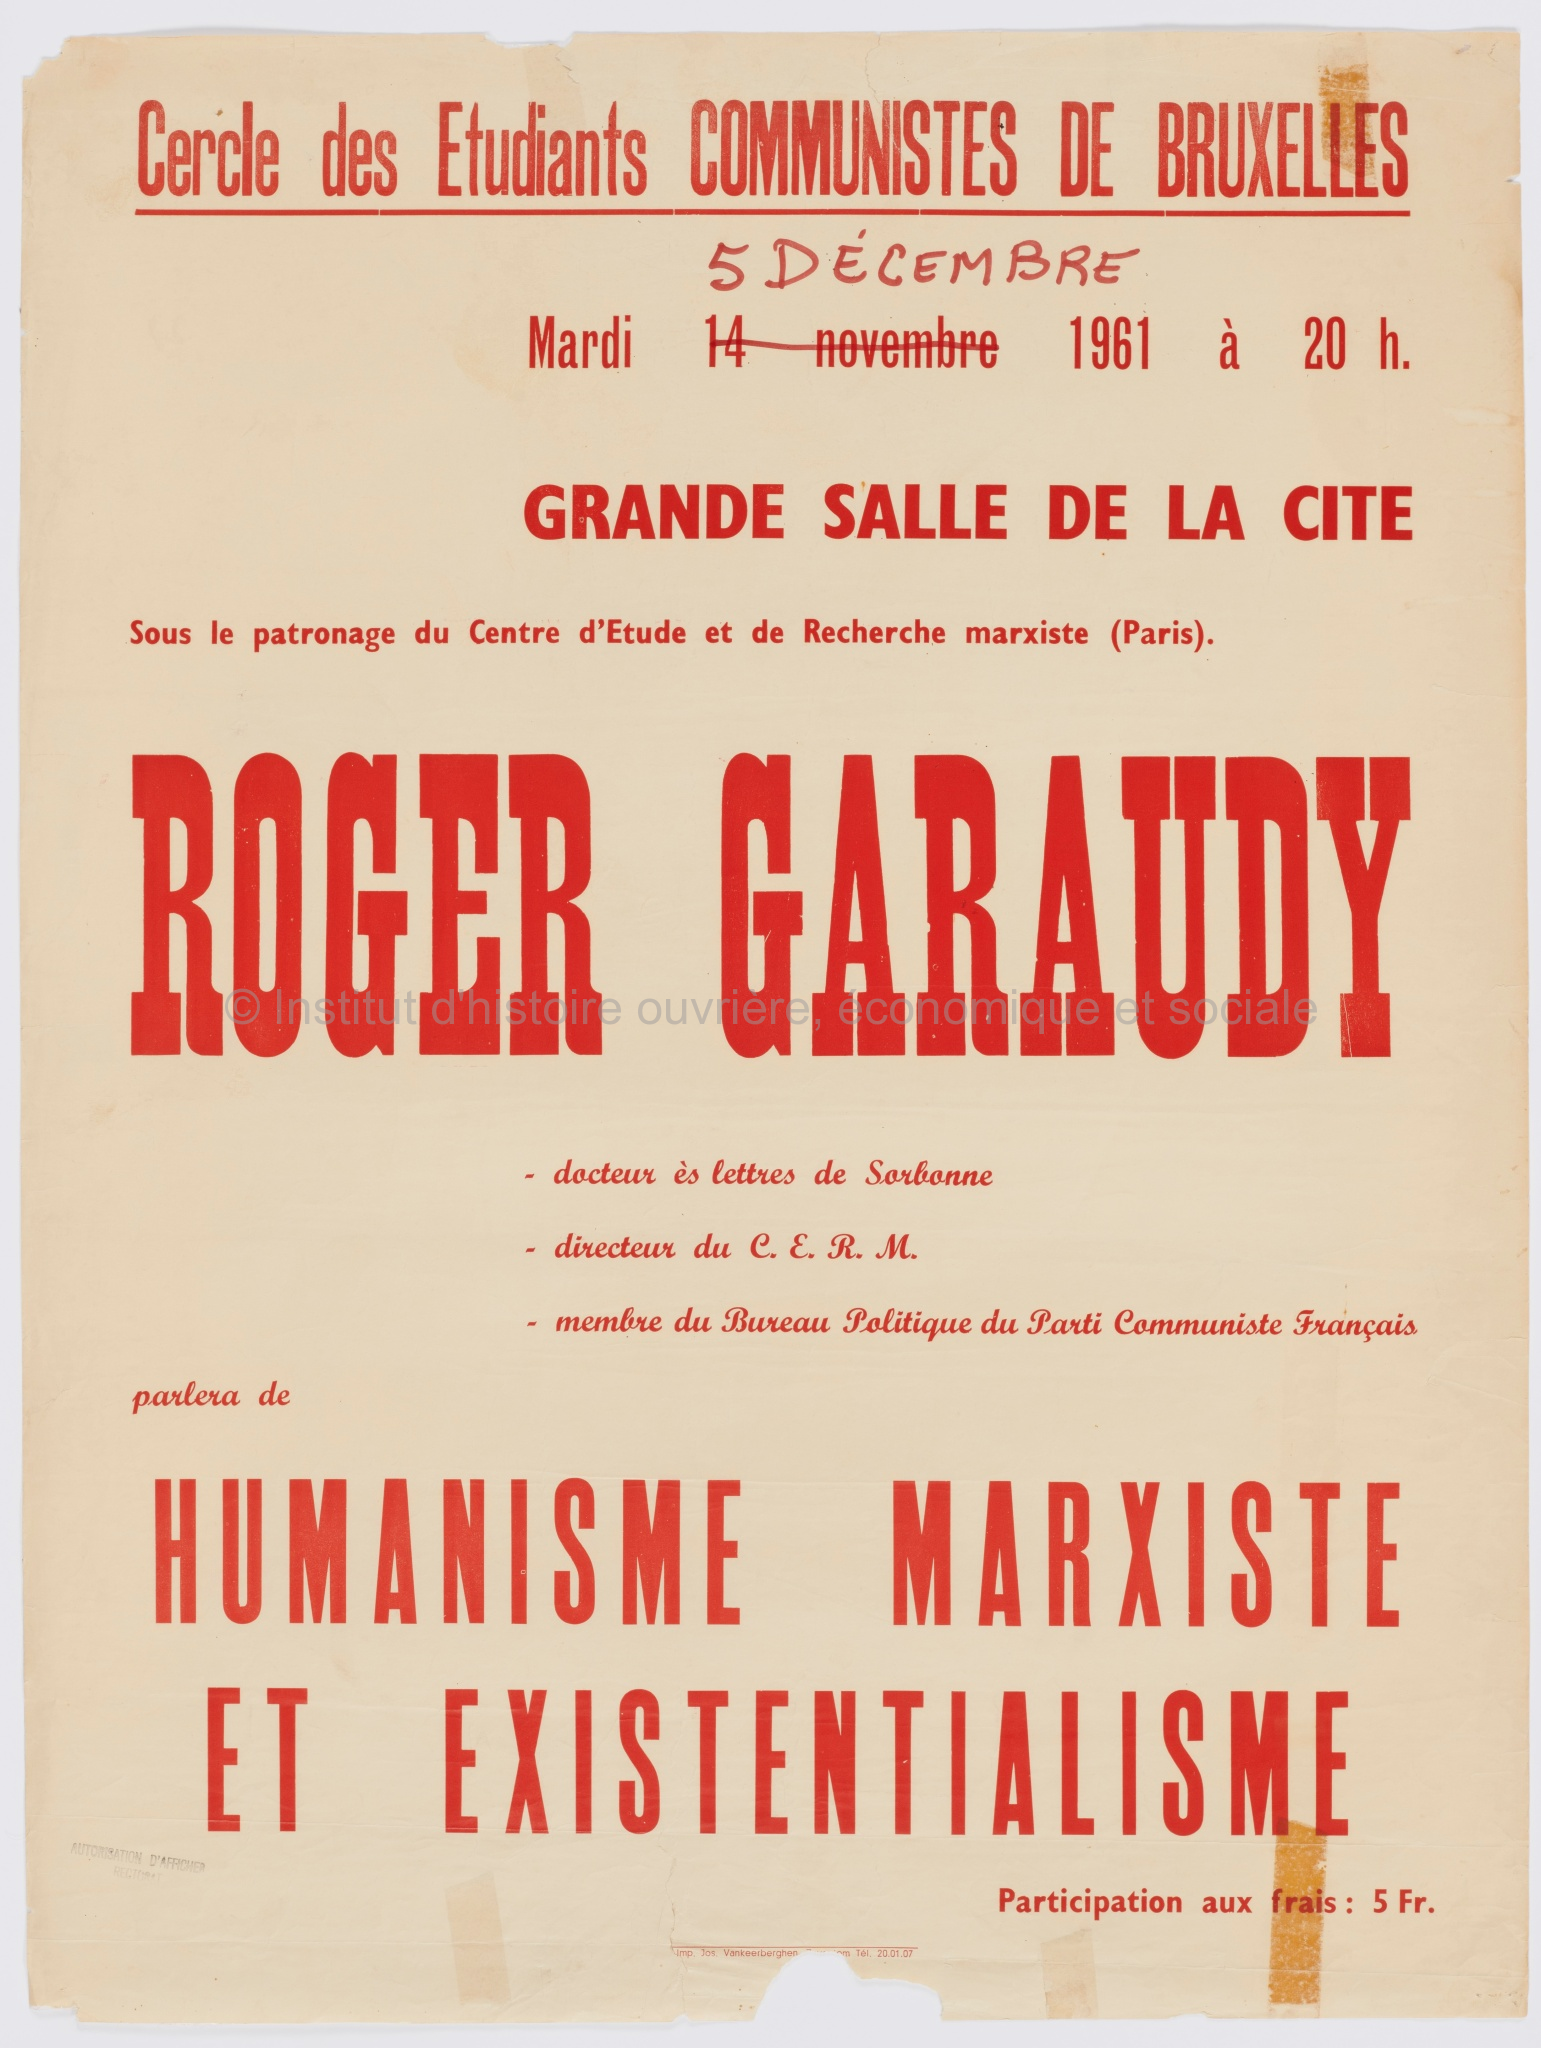 Roger Garaudy parlera de "Humanisme marxiste et existentialisme"